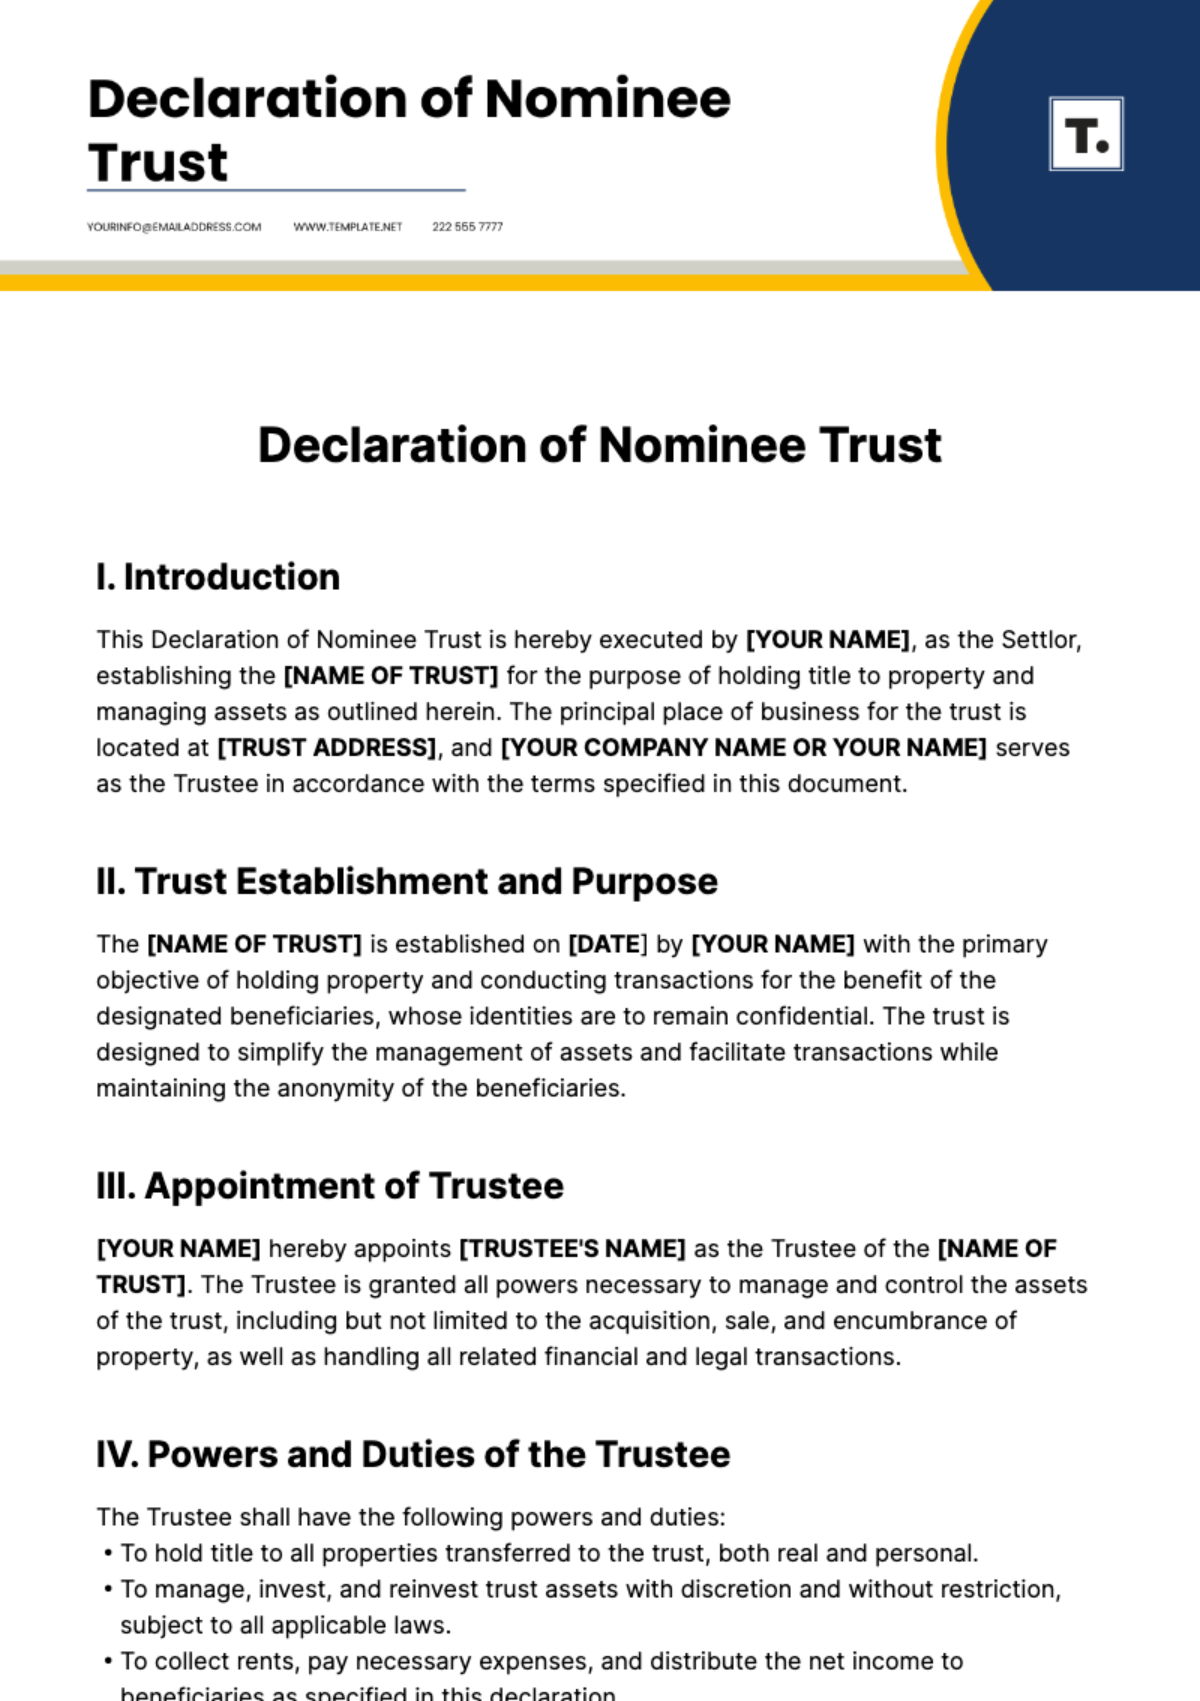 Free Declaration Of Nominee Trust Template